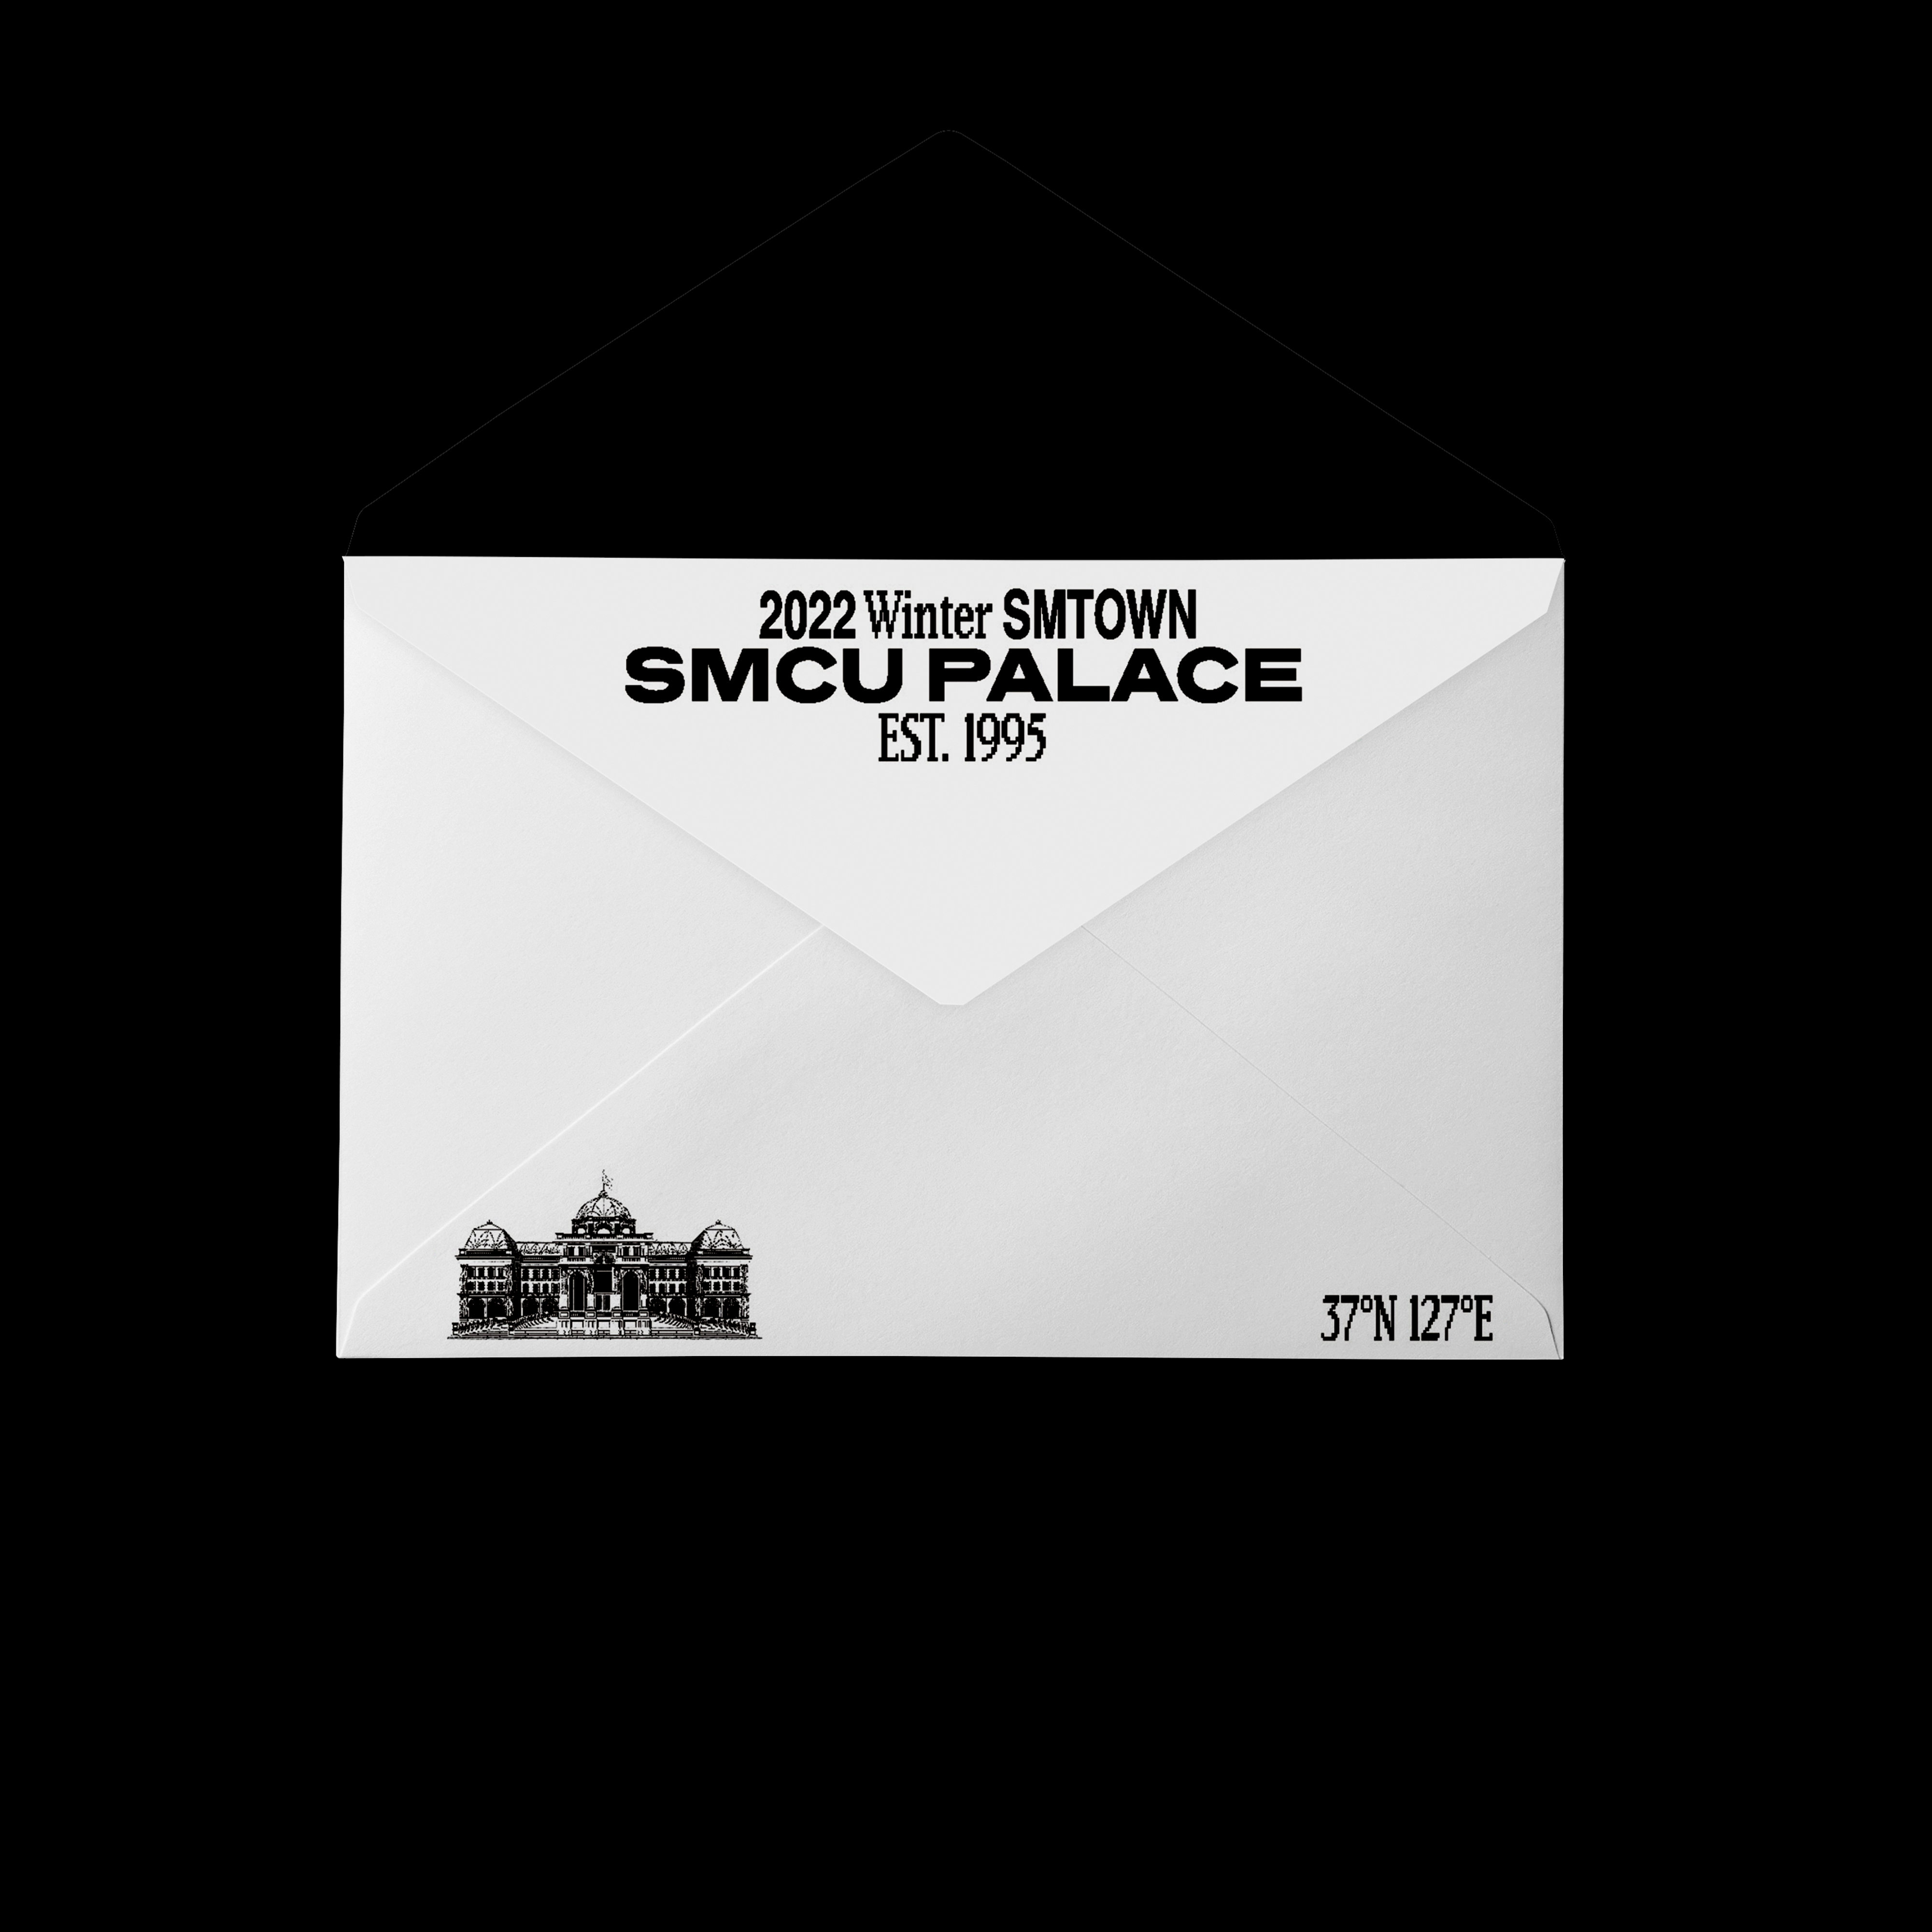 [全款 裸专] Super Junior - 2022 Winter SMTOWN : SMCU PALACE (GUEST. SUPER JUNIOR) (Membership Card Ver.) _OldBlue_老蓝